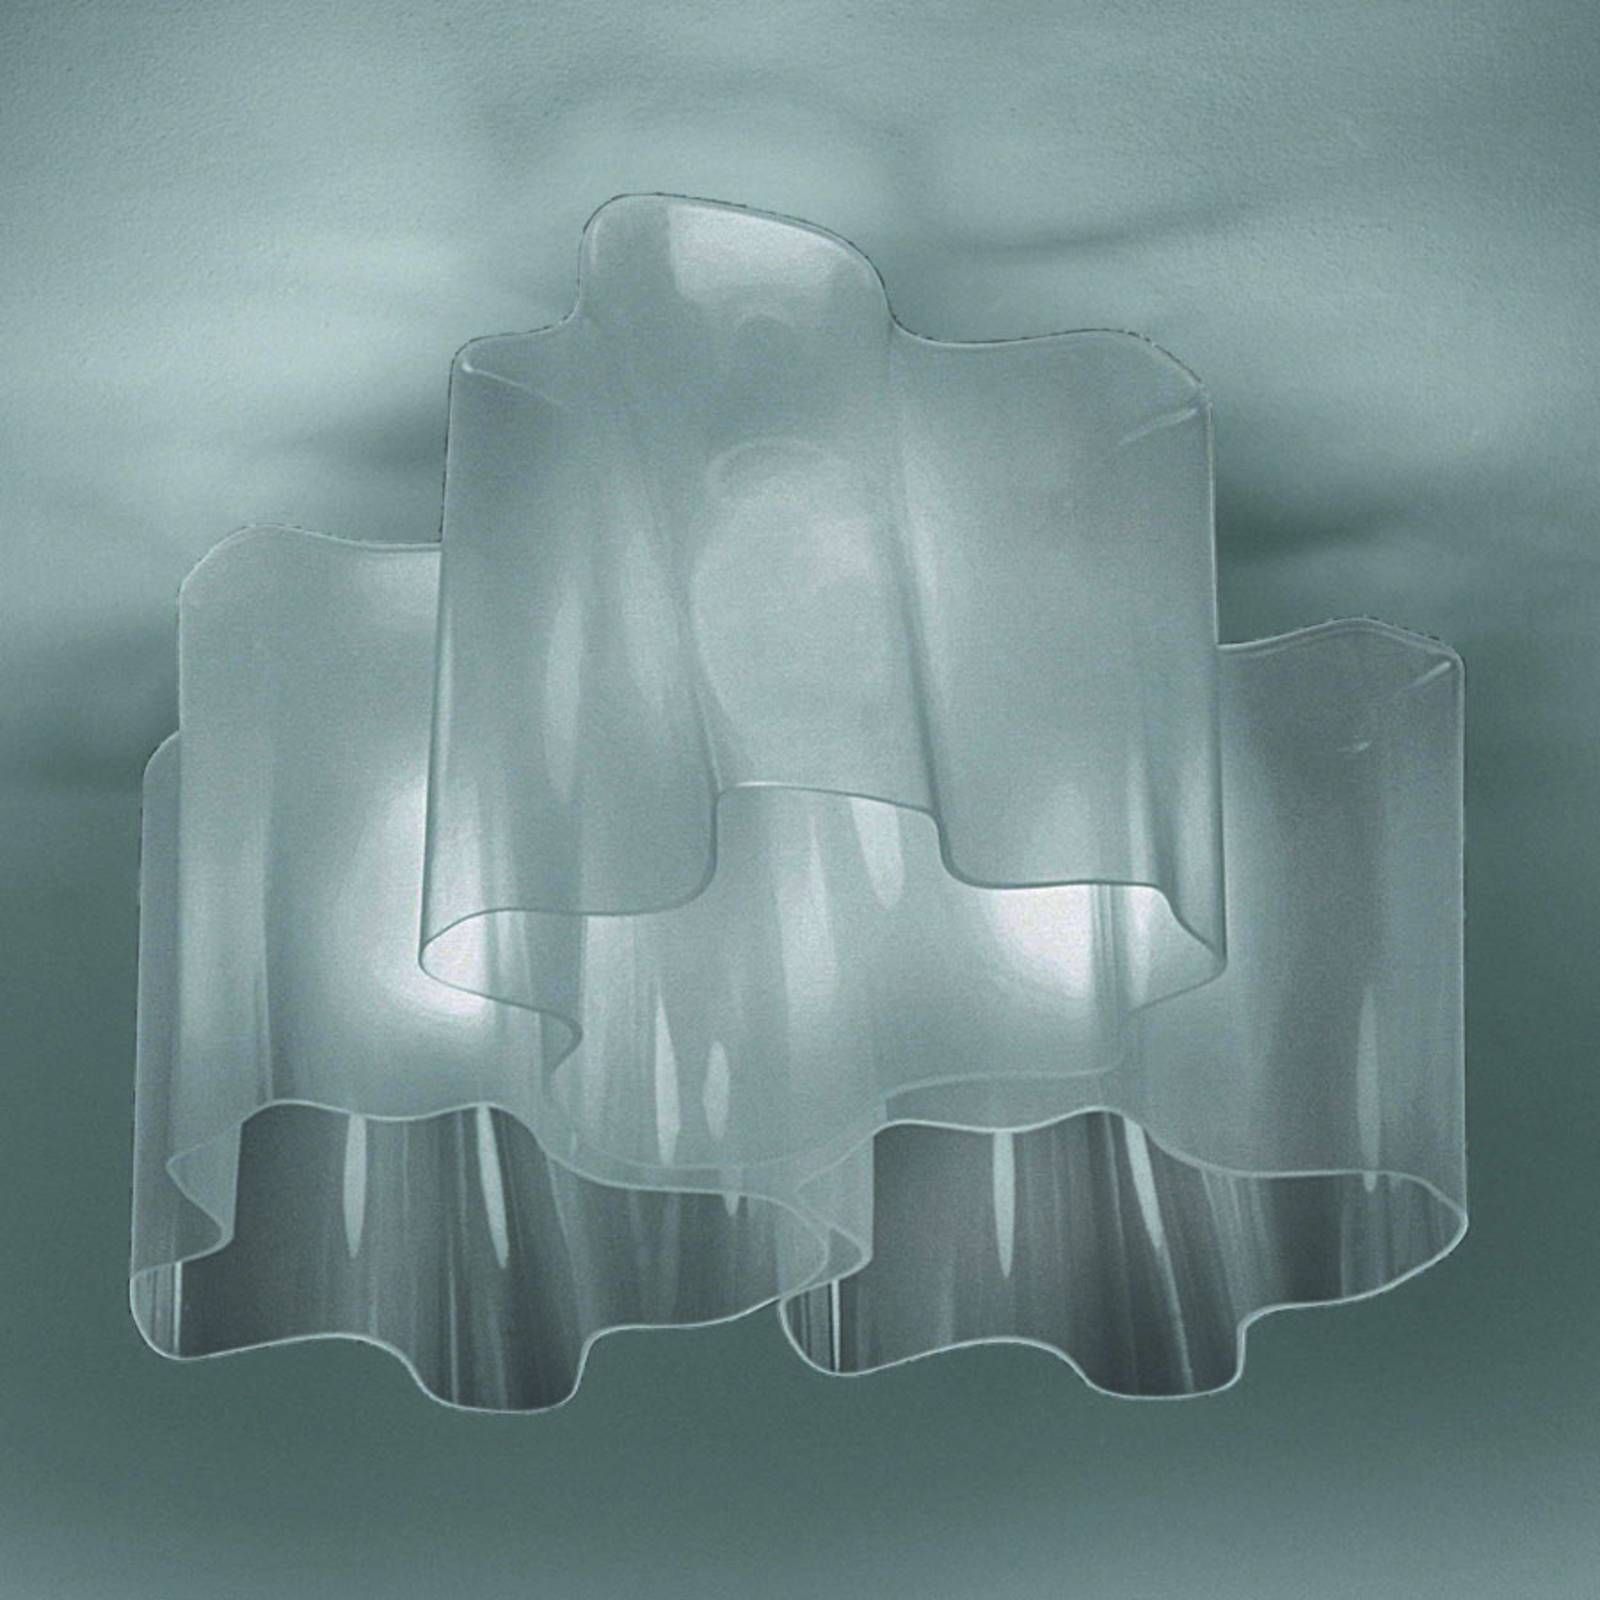 Artemide Stropné svietidlo Logico 120° 66x66 sivé, Obývacia izba / jedáleň, kov, sklo, E27, 116W, P: 66 cm, L: 66 cm, K: 35cm